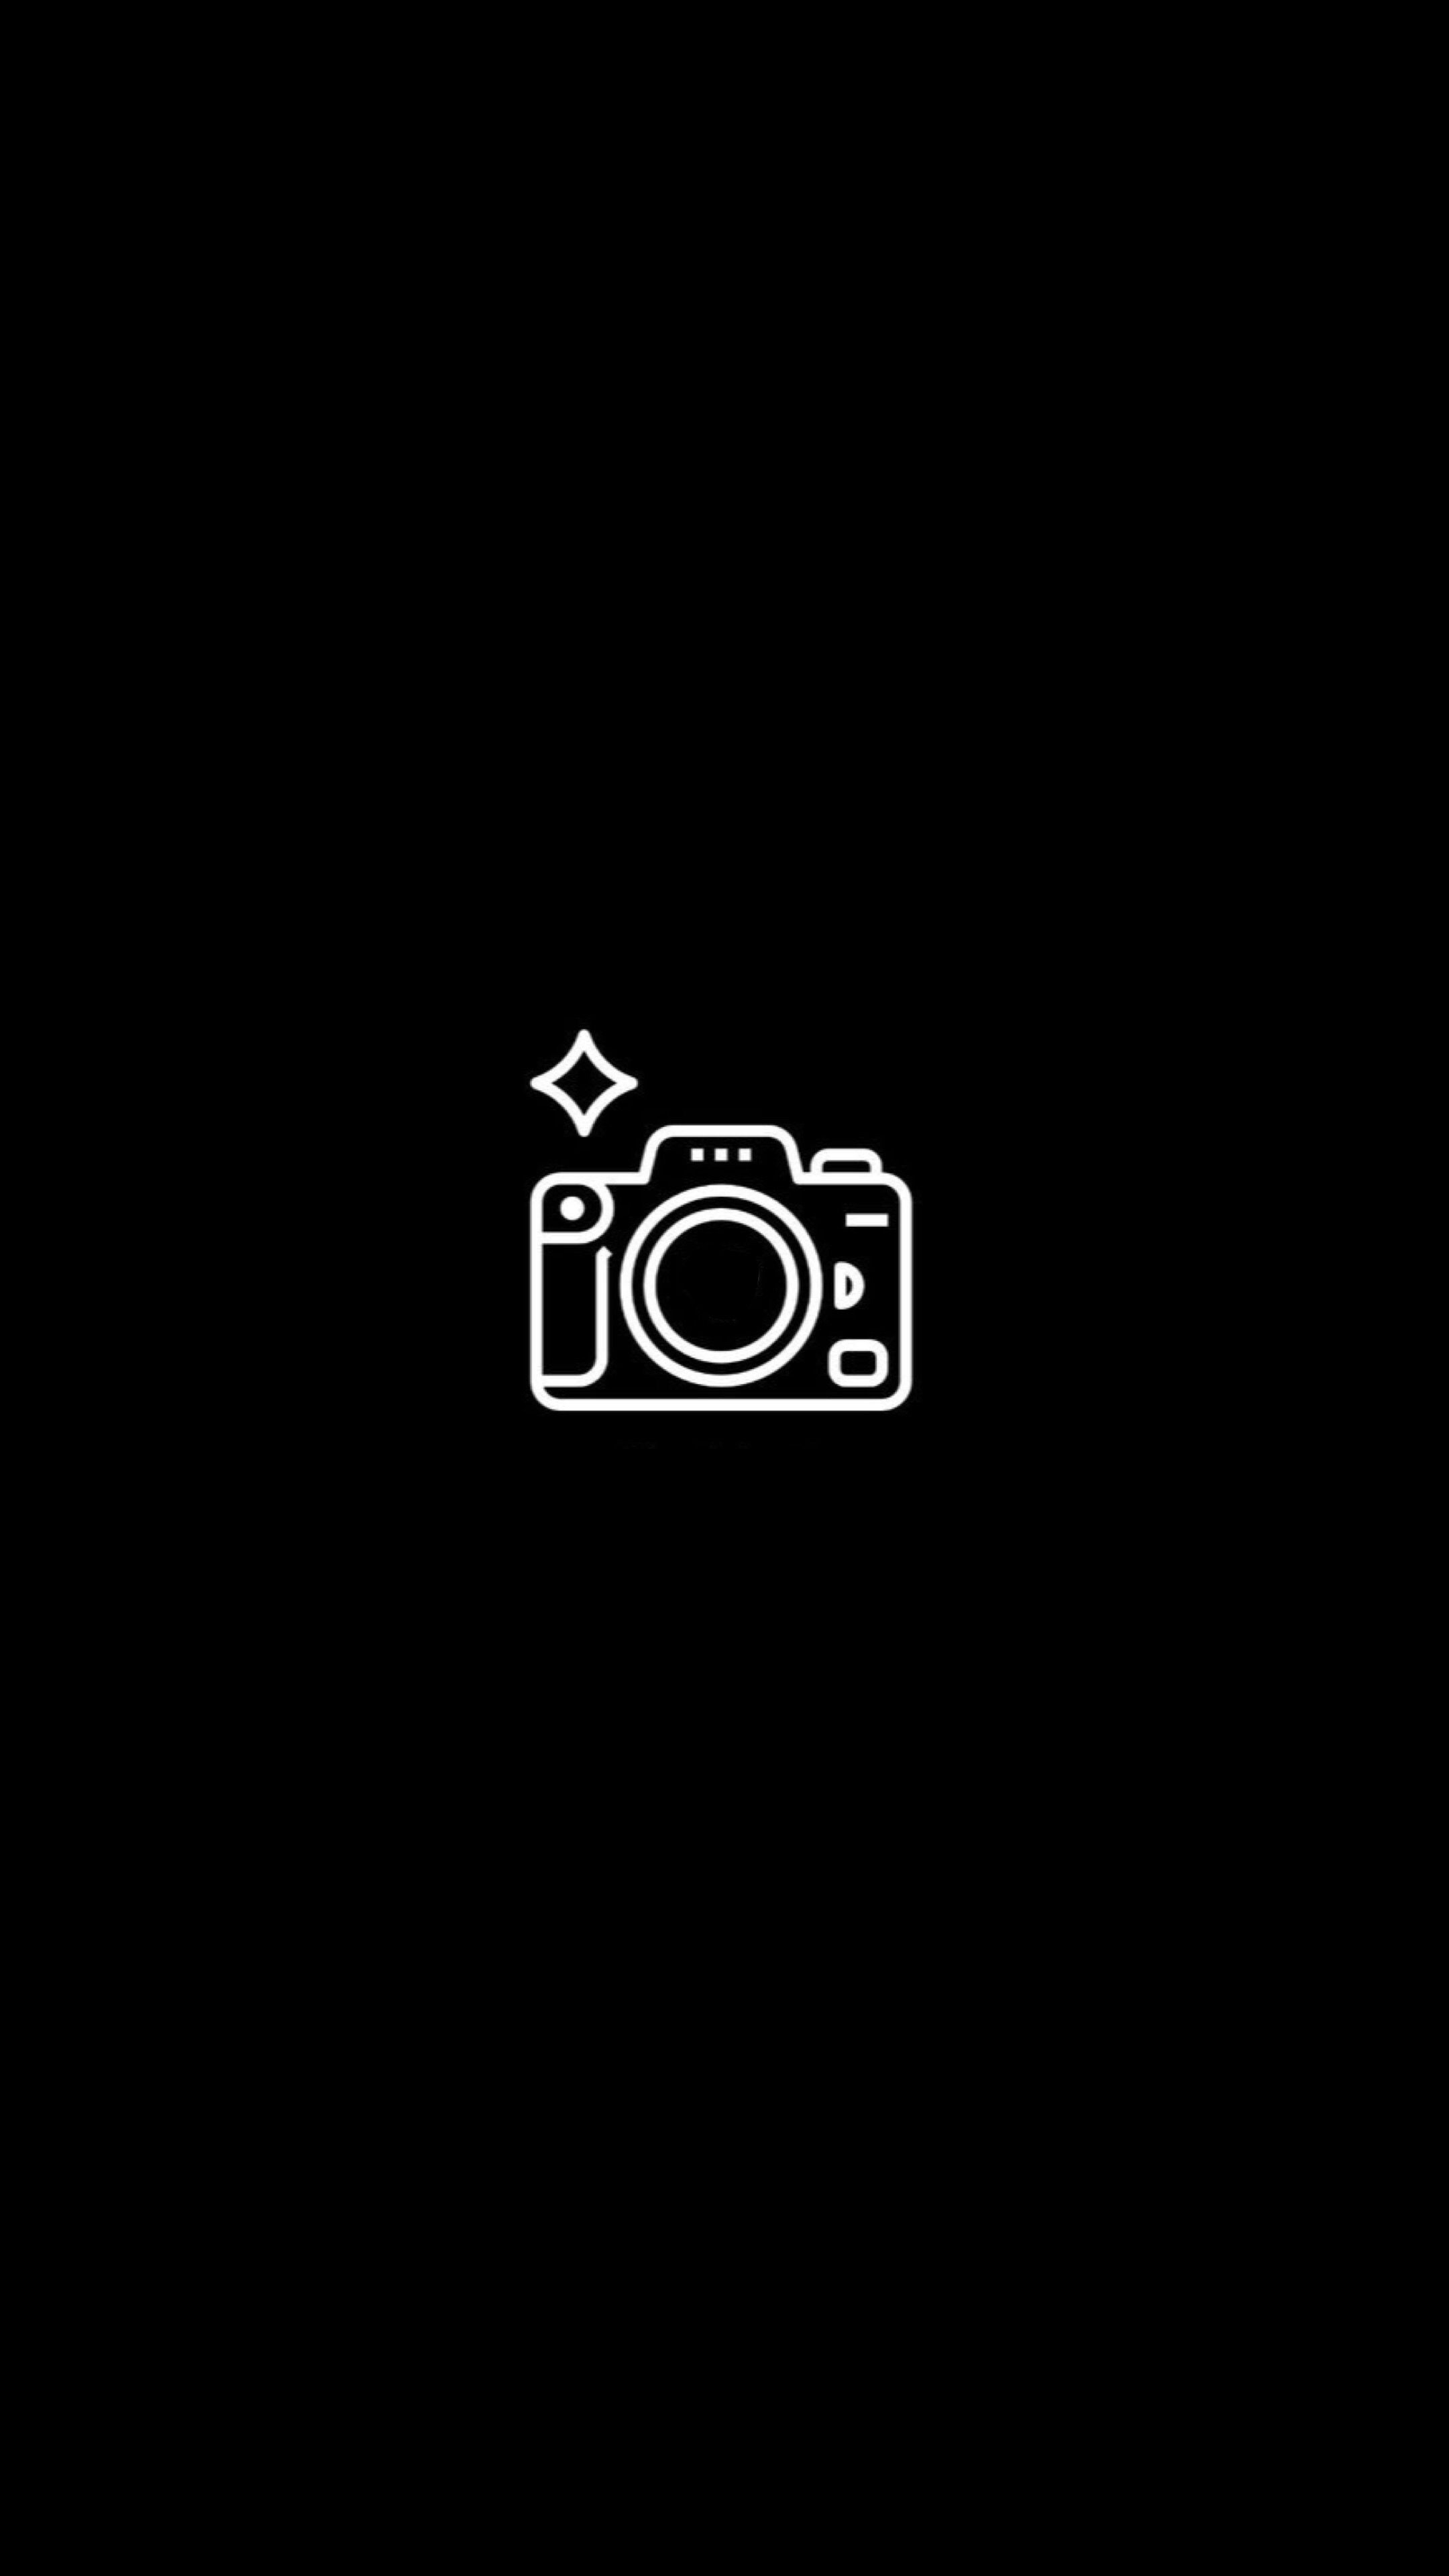 instagram highlight icons black. Instagram highlight icons, Instagram black theme, Black and white instagram